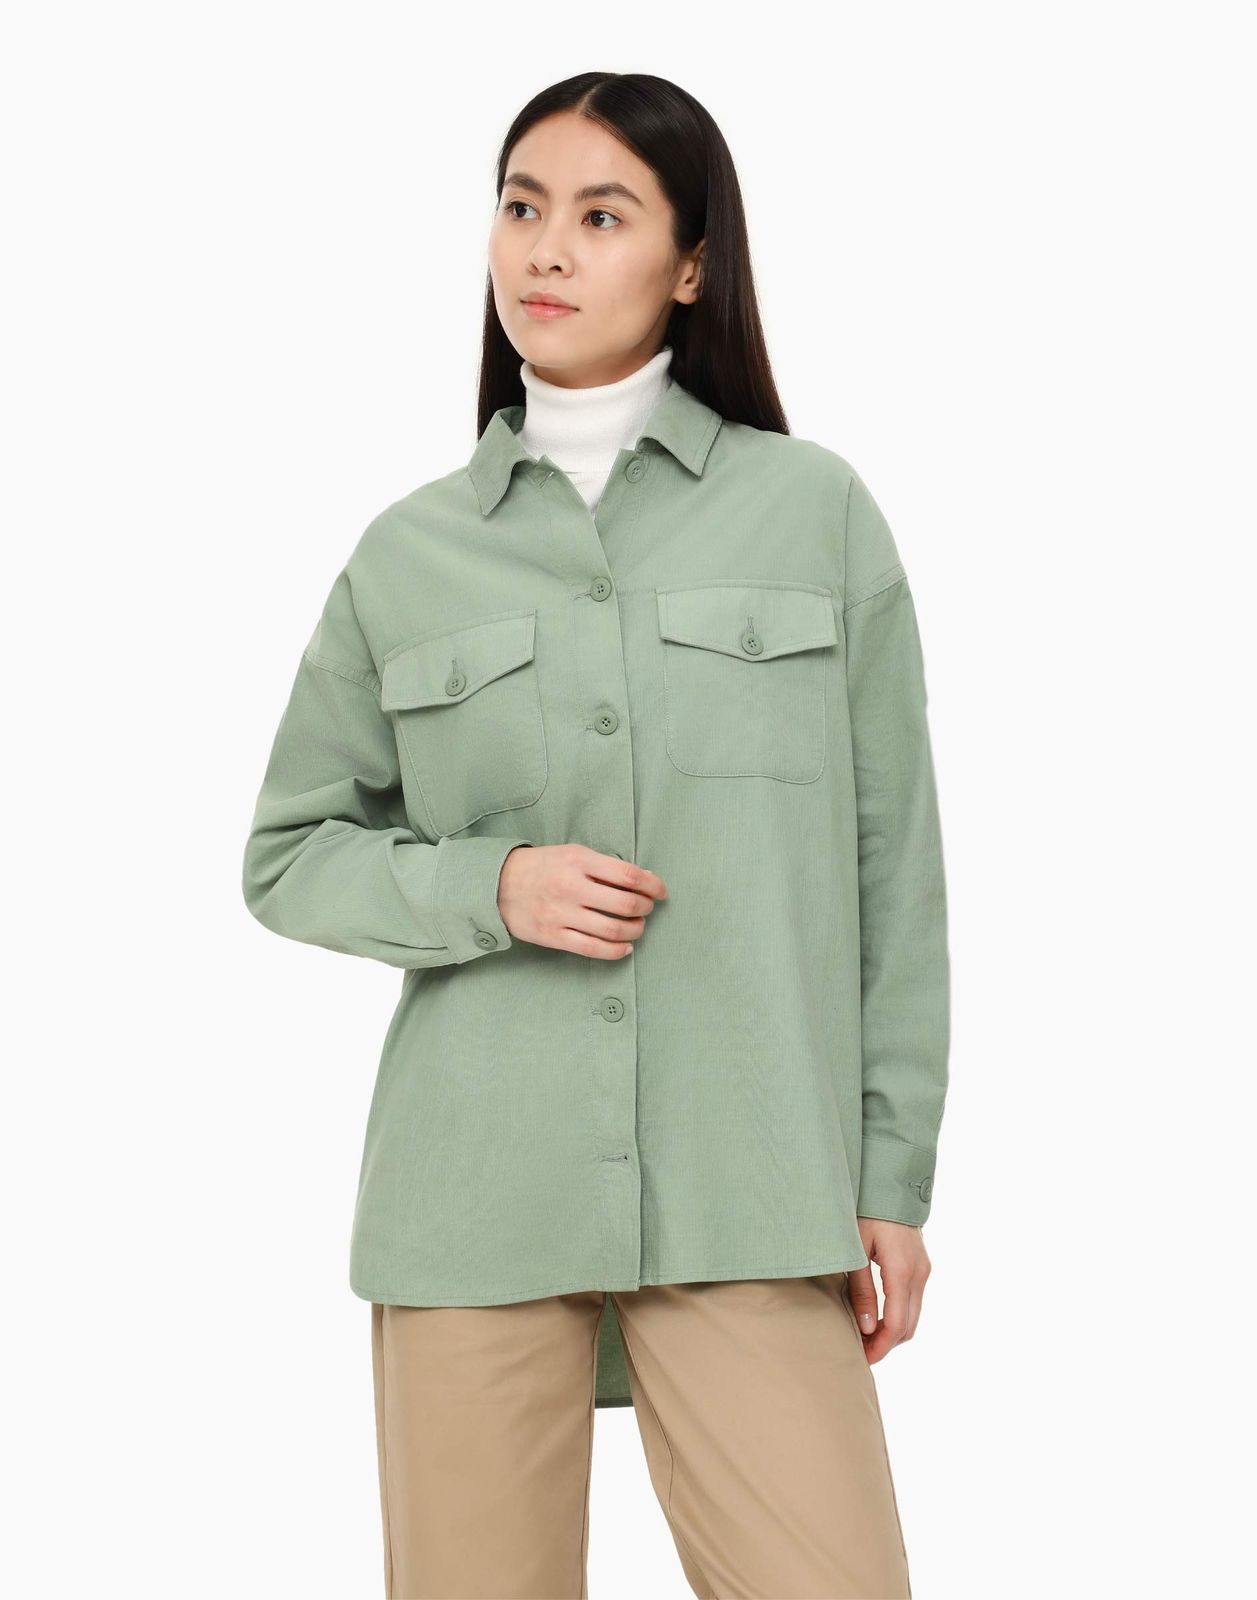 Рубашка женская Gloria Jeans GWT003205 зеленая L-XL (48-54)